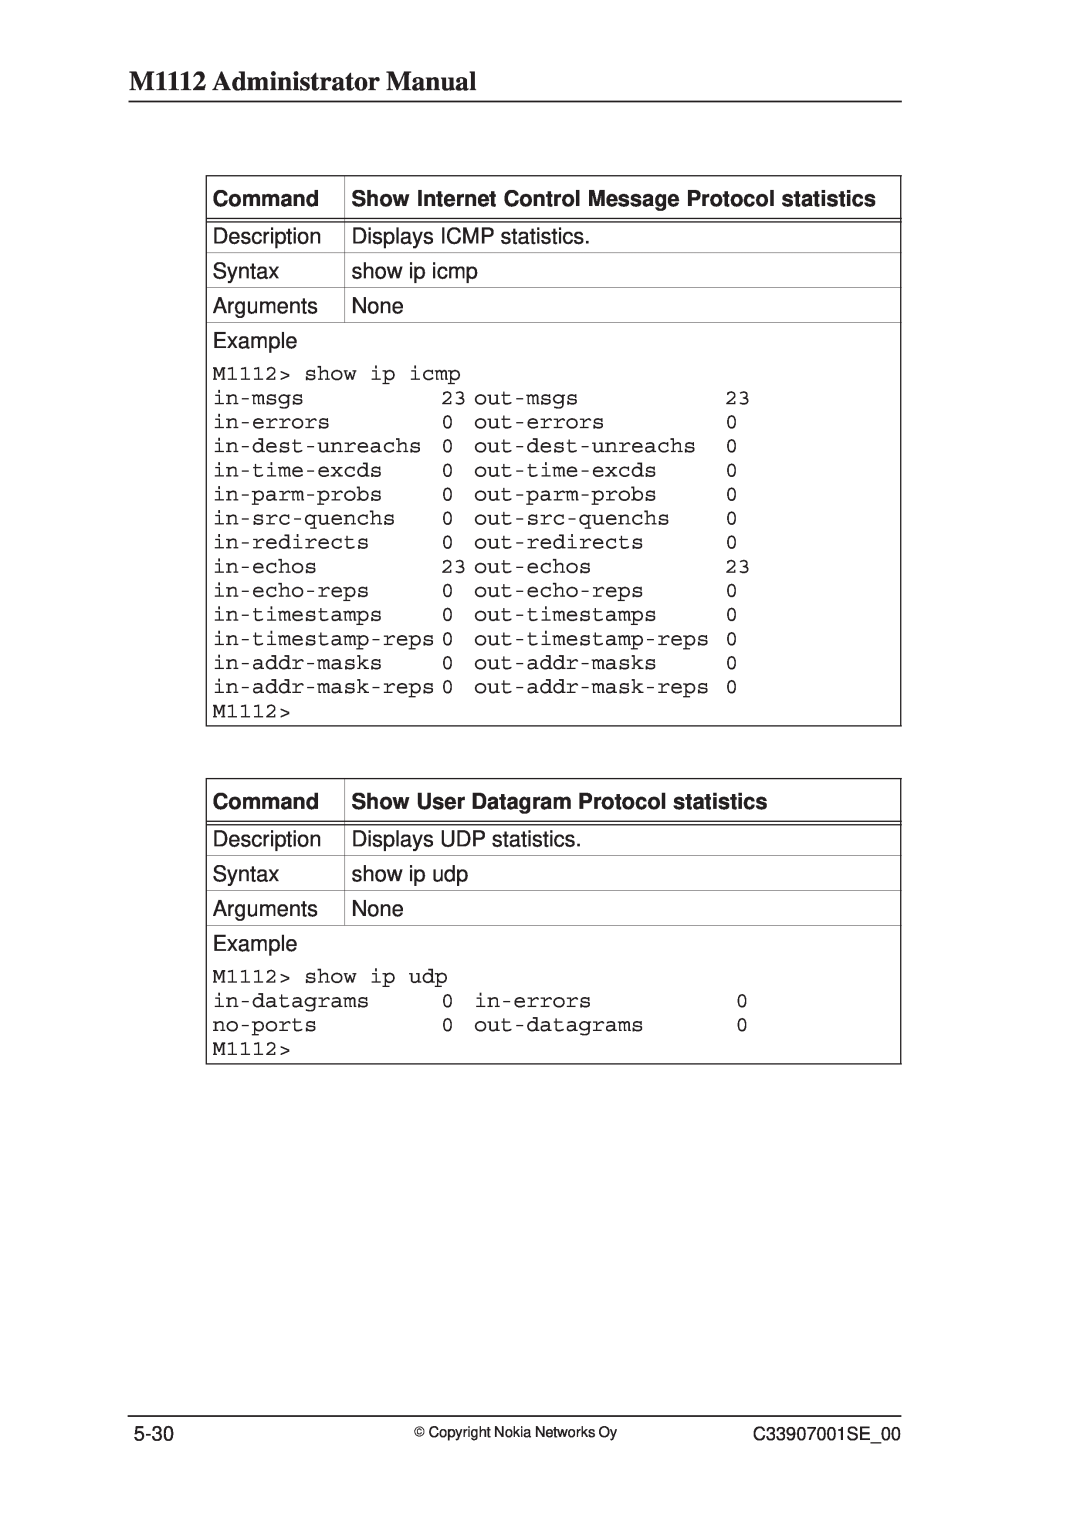 Nokia manual M1112 Administrator Manual, Command, Show Internet Control Message Protocol statistics 